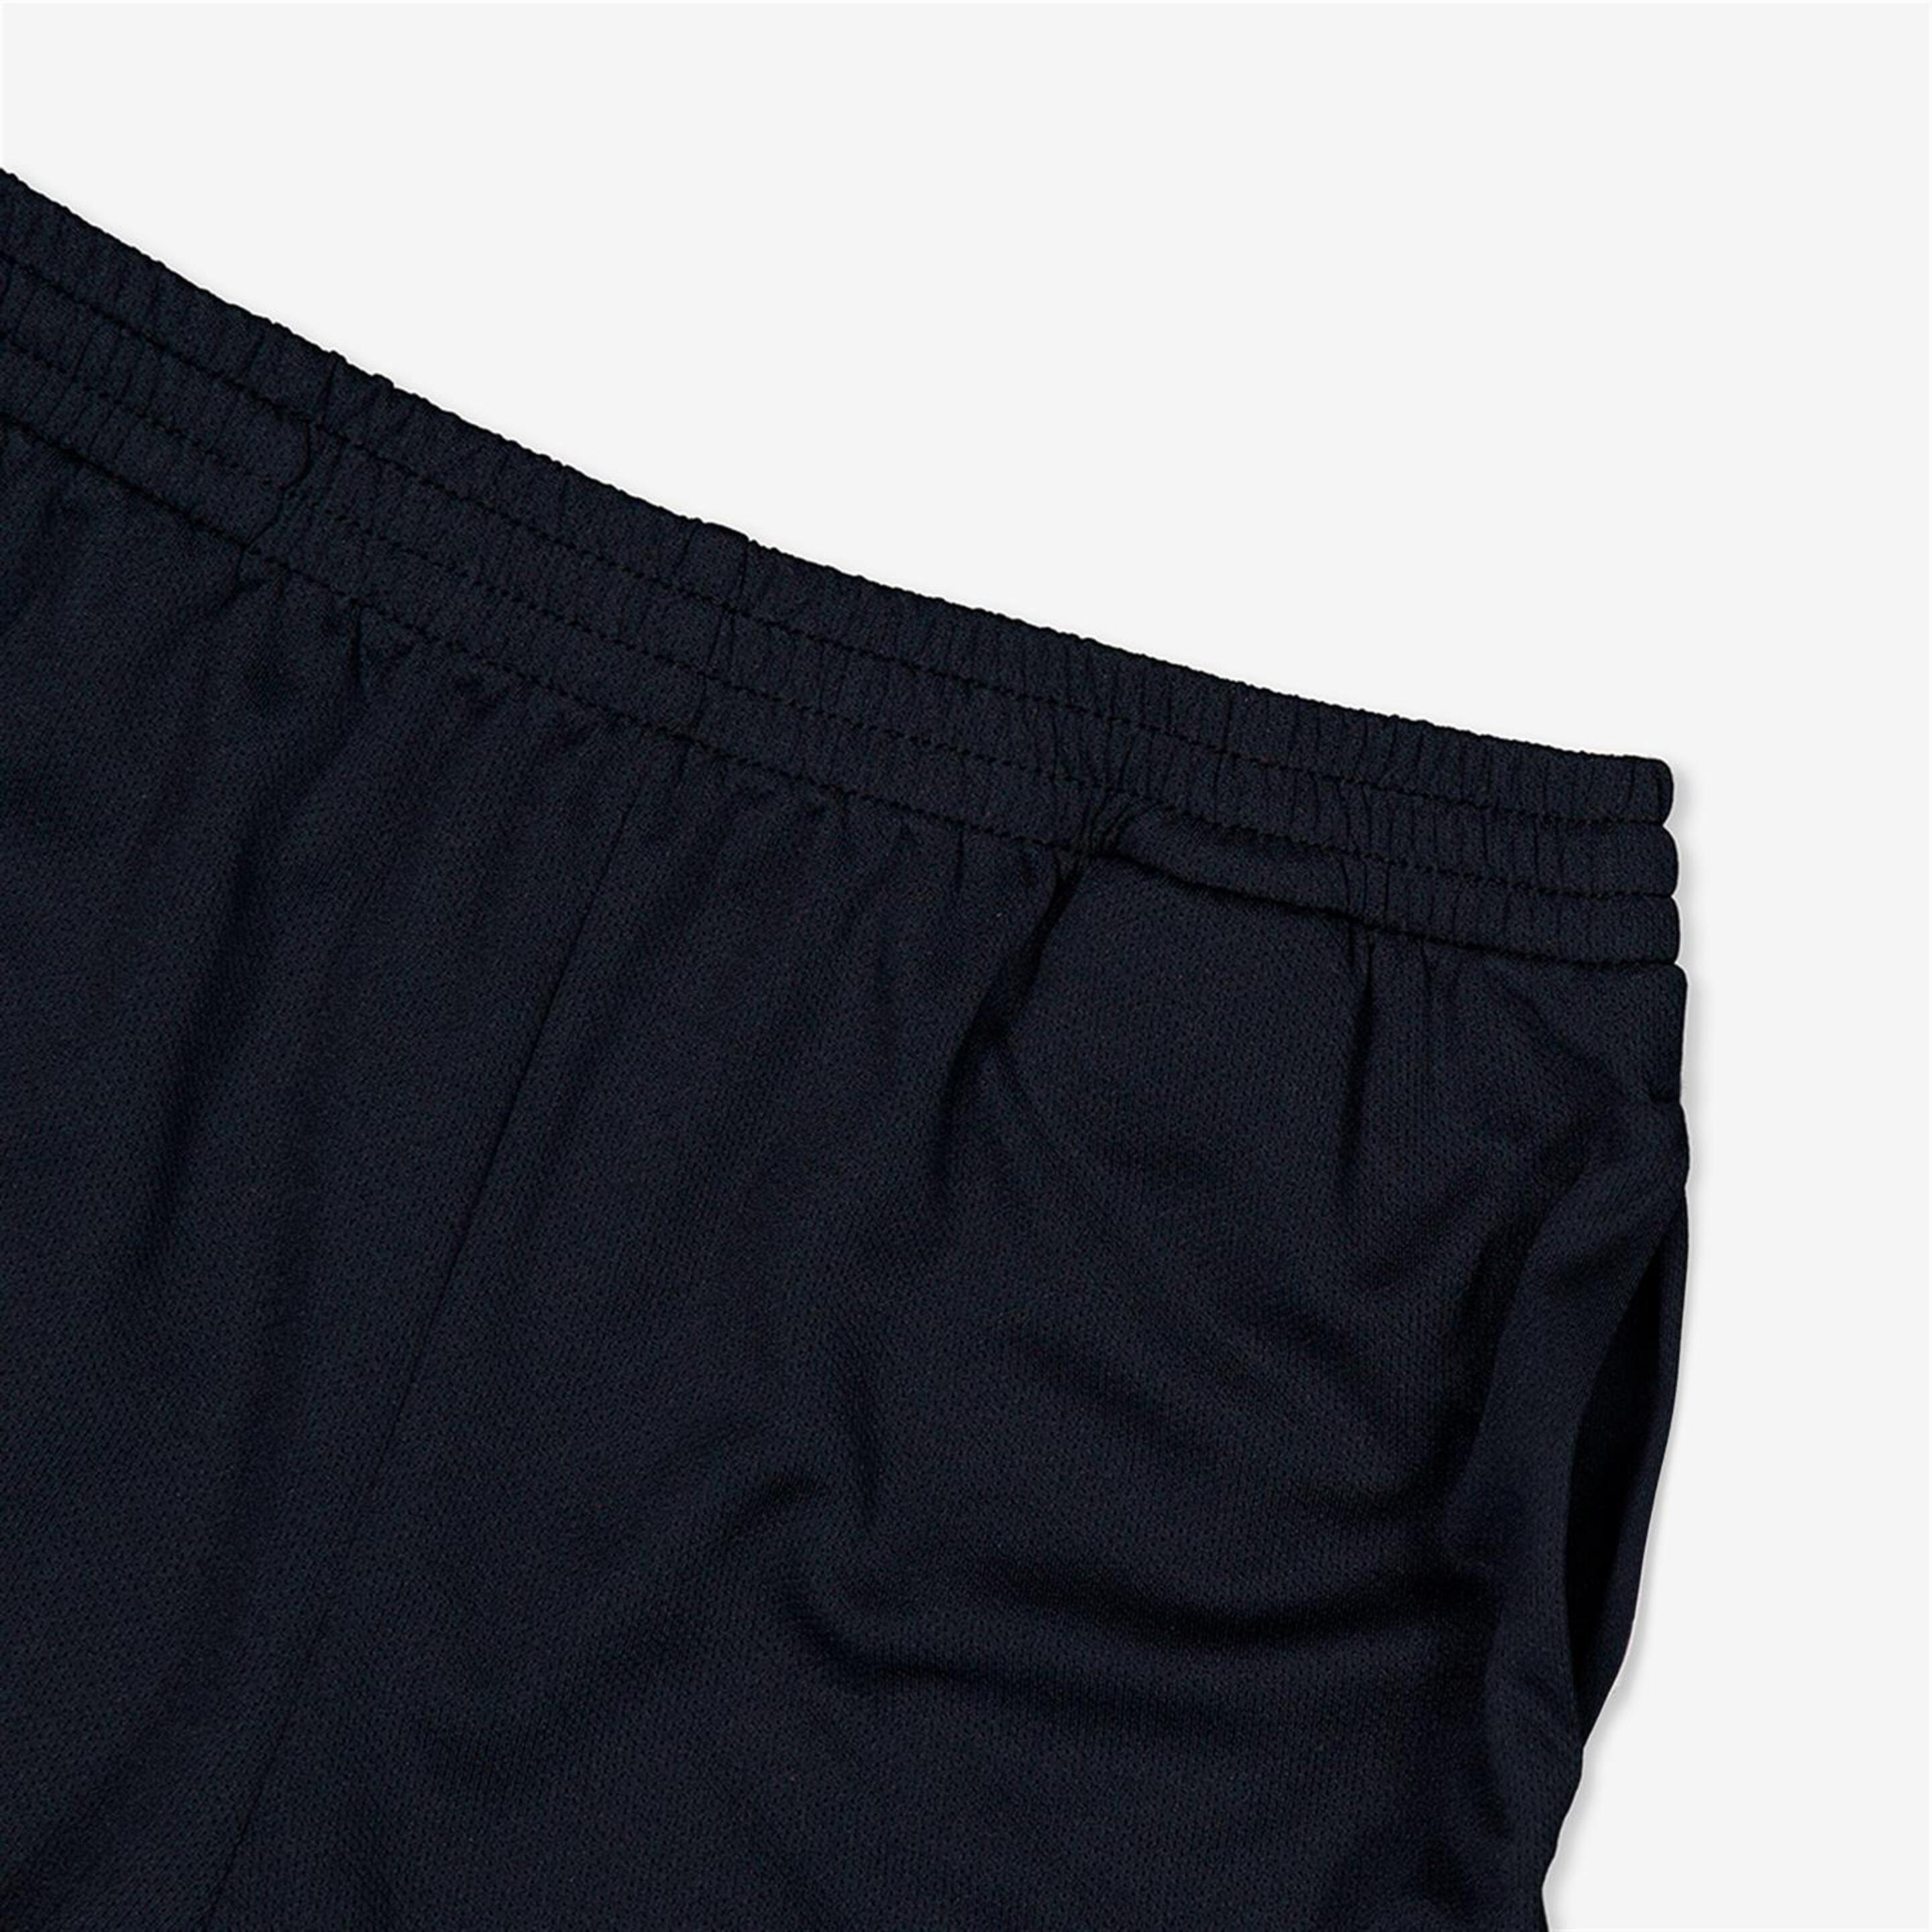 Pantalón Nike - Negro - Pantalón Corto Niño